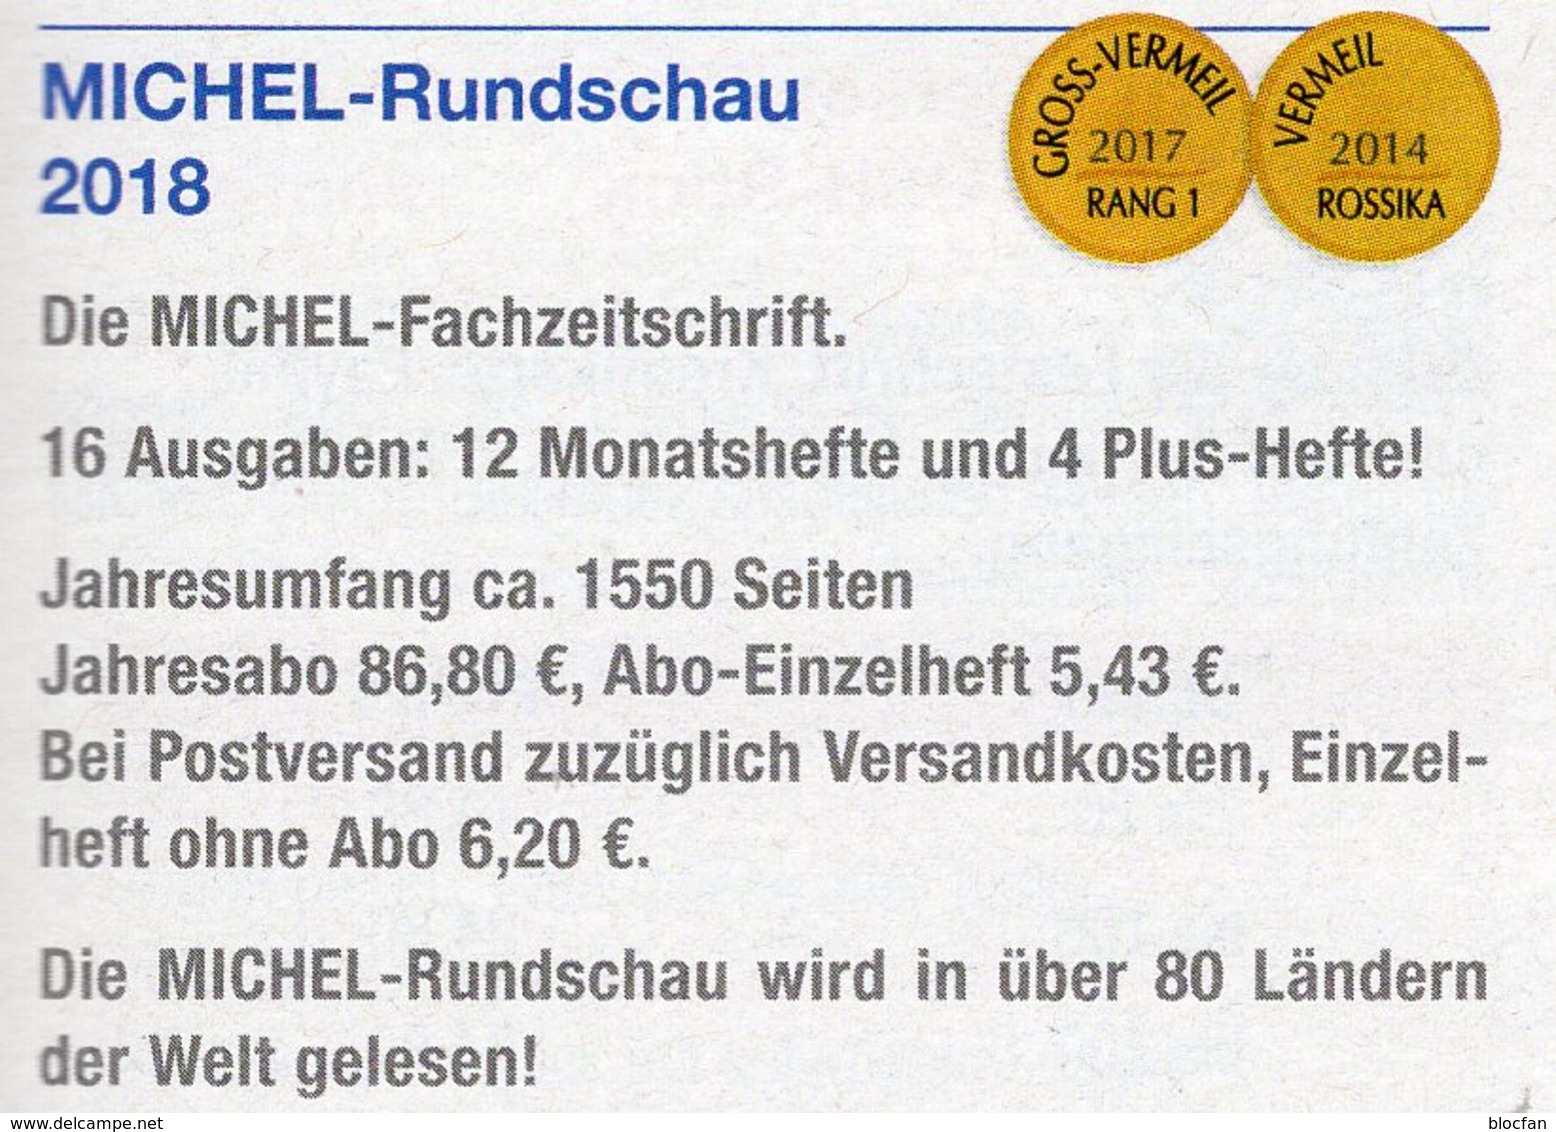 MICHEL Briefmarken Rundschau 8/2018 neu 6€ stamps of the world catalogue/magacine of Germany ISBN 978-3-95402-600-5